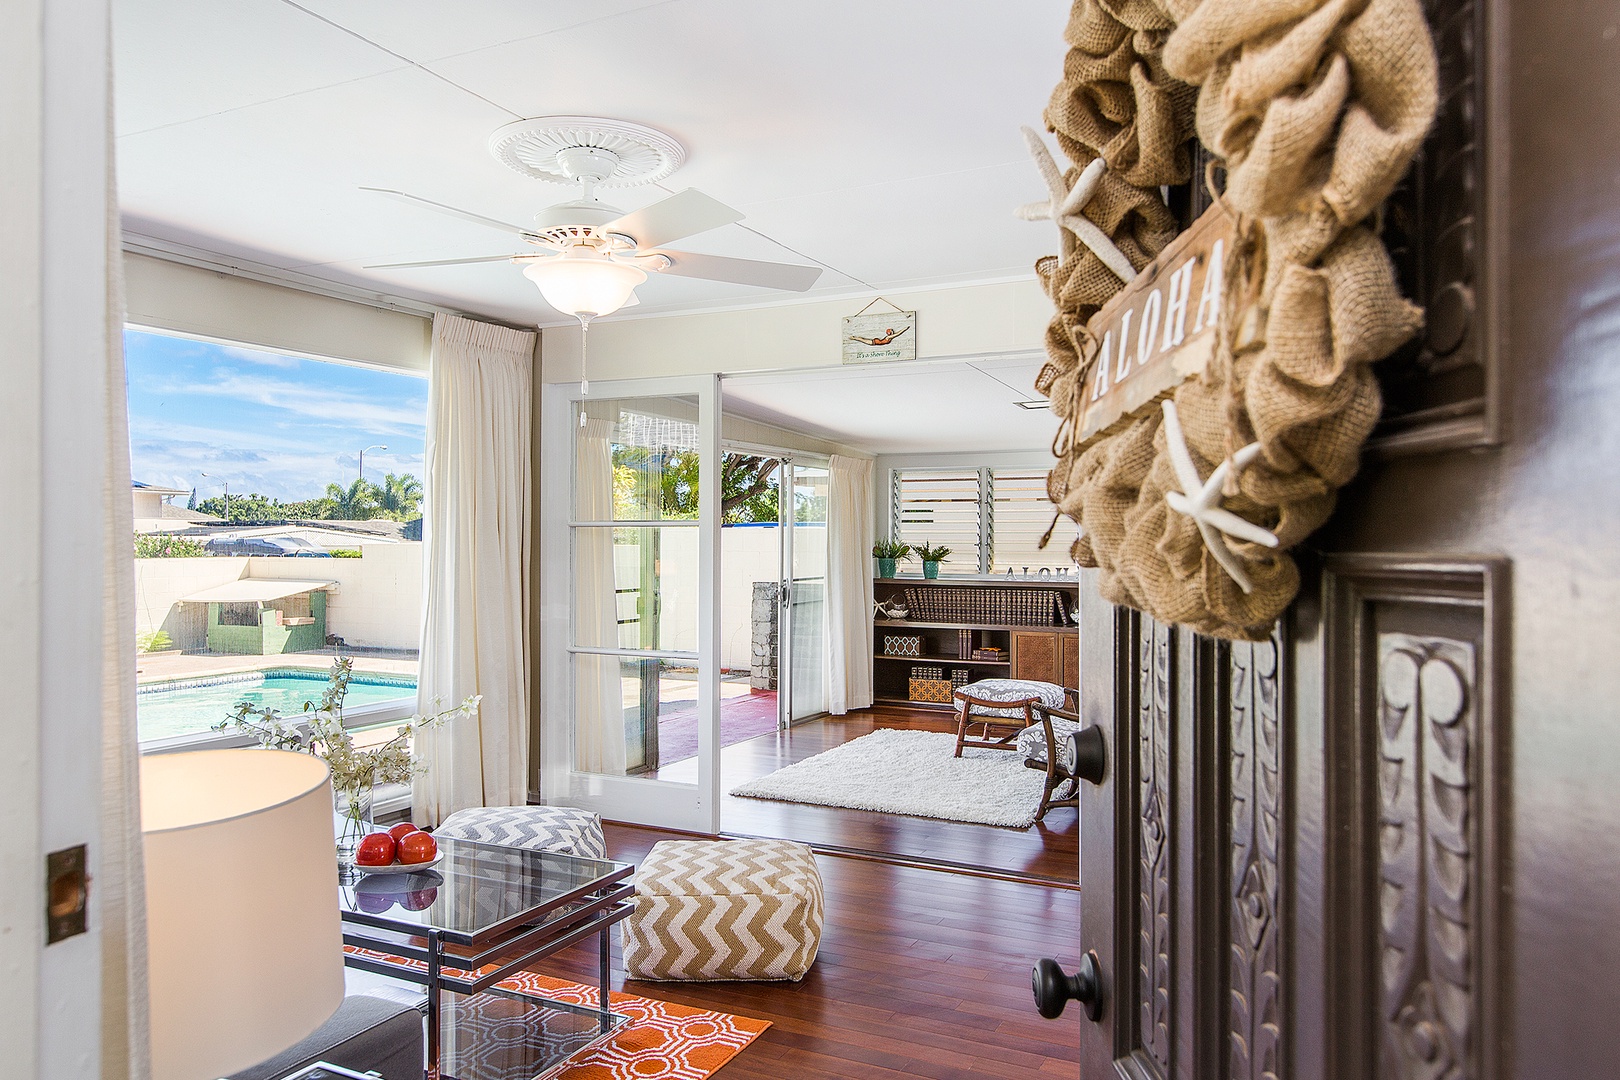 Honolulu Vacation Rentals, Kahala Cottage - Your view through the front door!